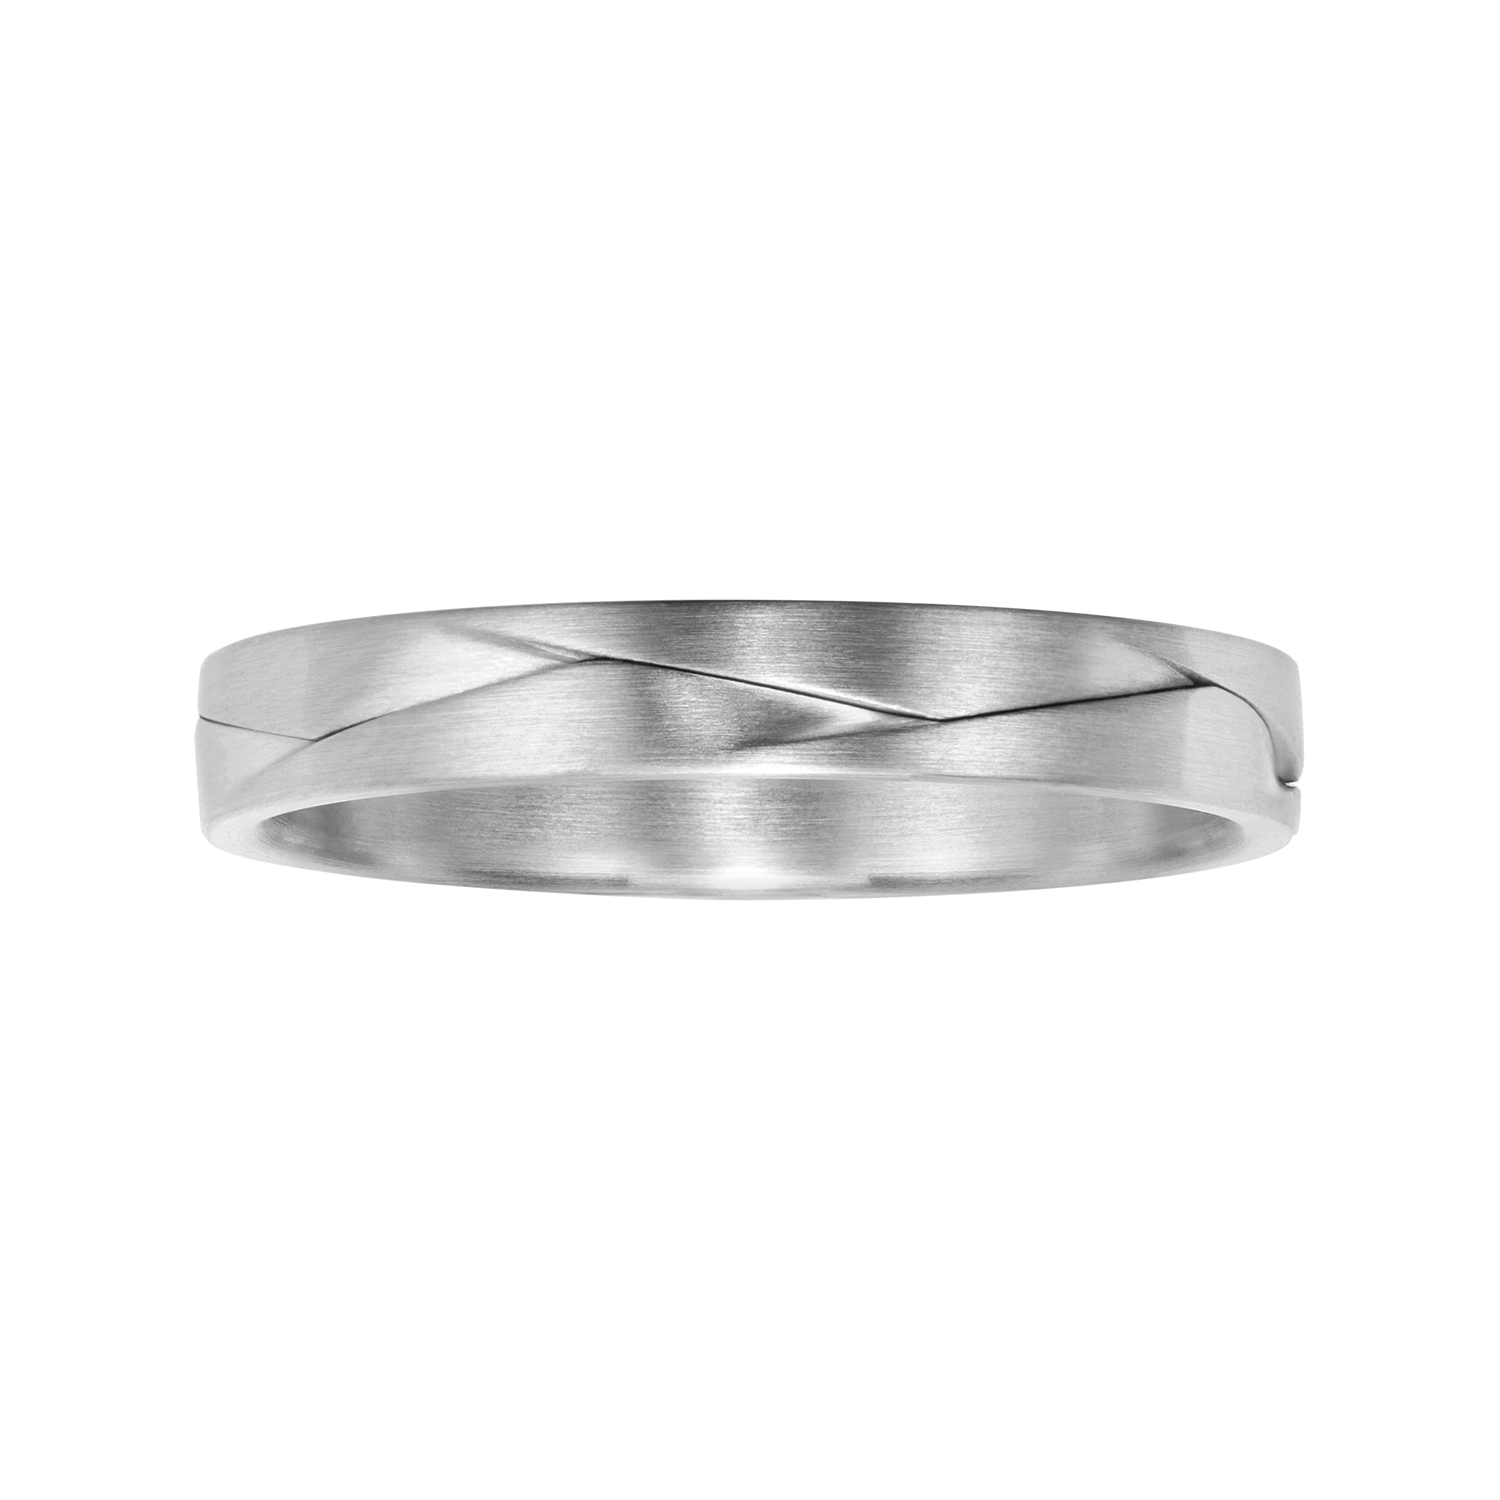  FURRER JACOT, Wedding rings, SKU: 71-29430-0-0/035-74-0-62-0 | watchapproach.com